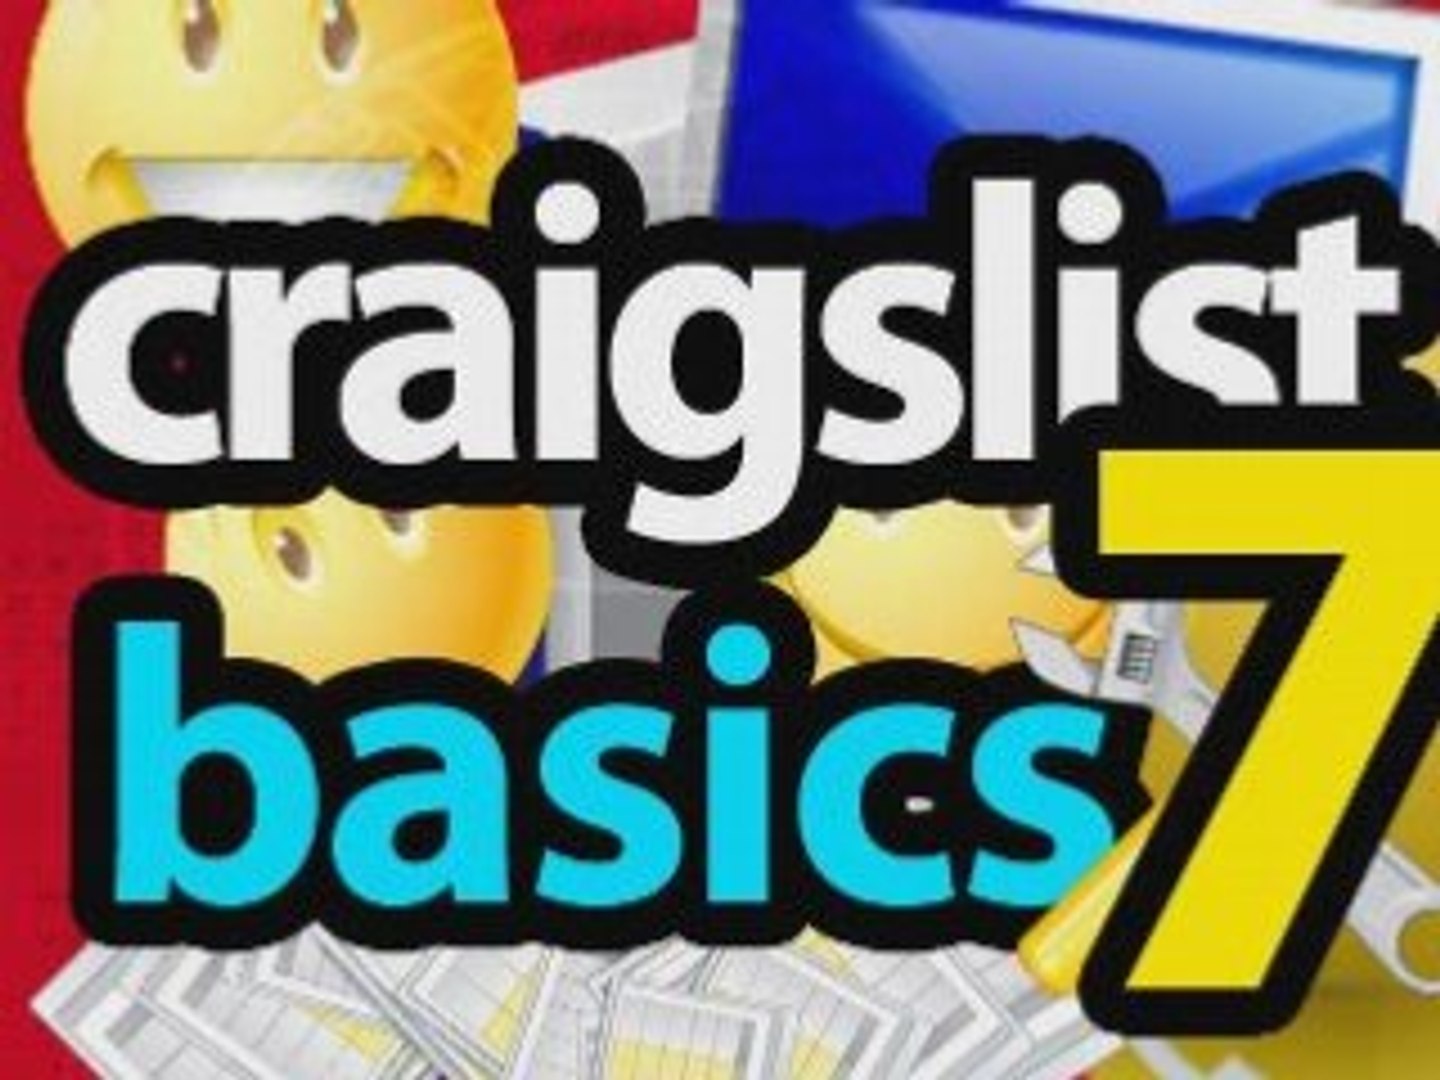 ⁣[My Internet Business] Craigslist Basics - 7 Testing